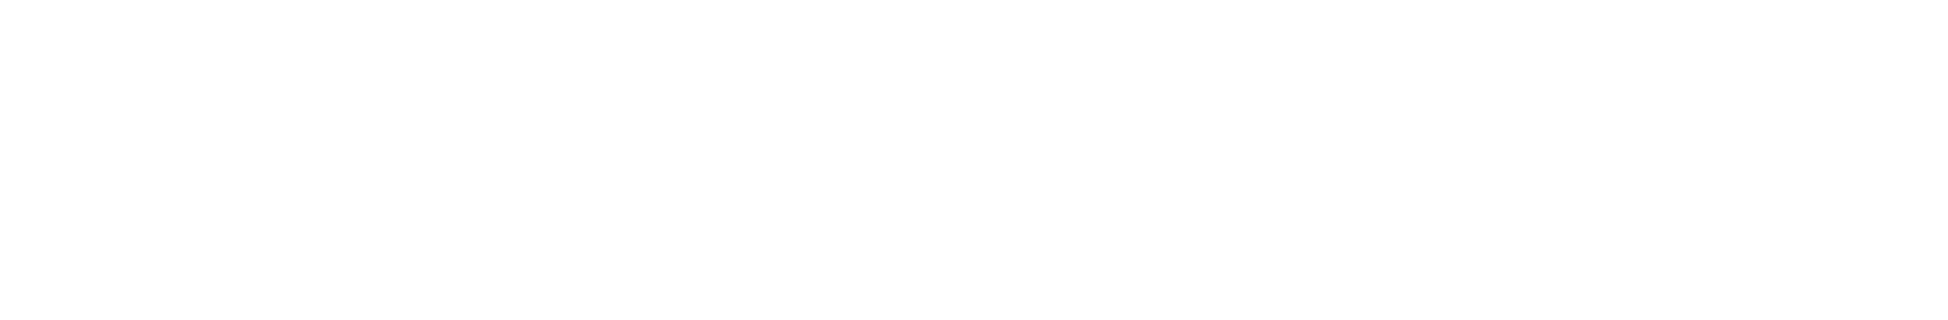 Fanscop Logo